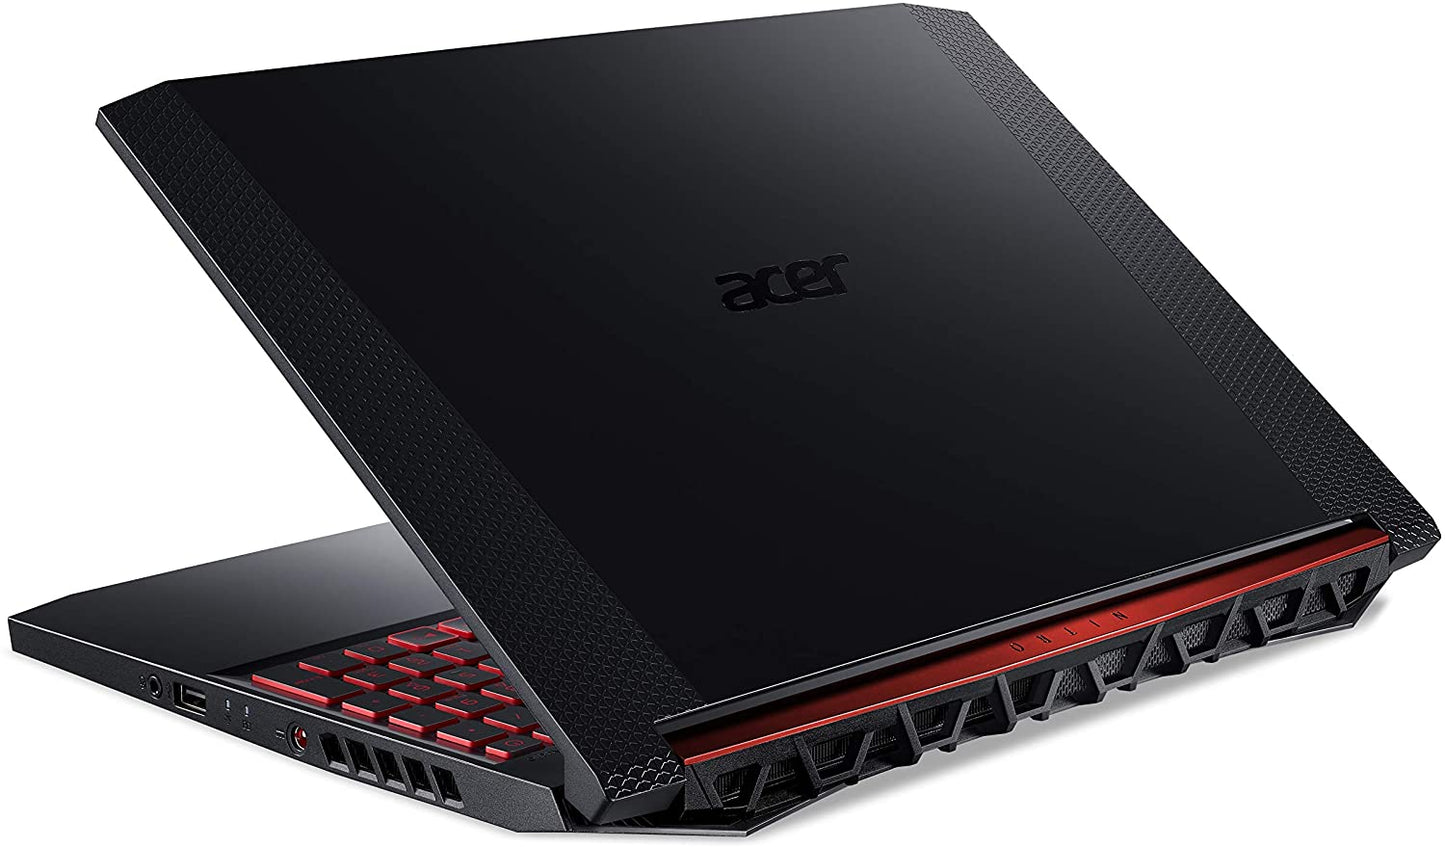 Acer Nitro 5 Gaming Laptop, 9th Gen Intel Core i5-9300H, 15.6 inch, 8GB DDR4, 256GB